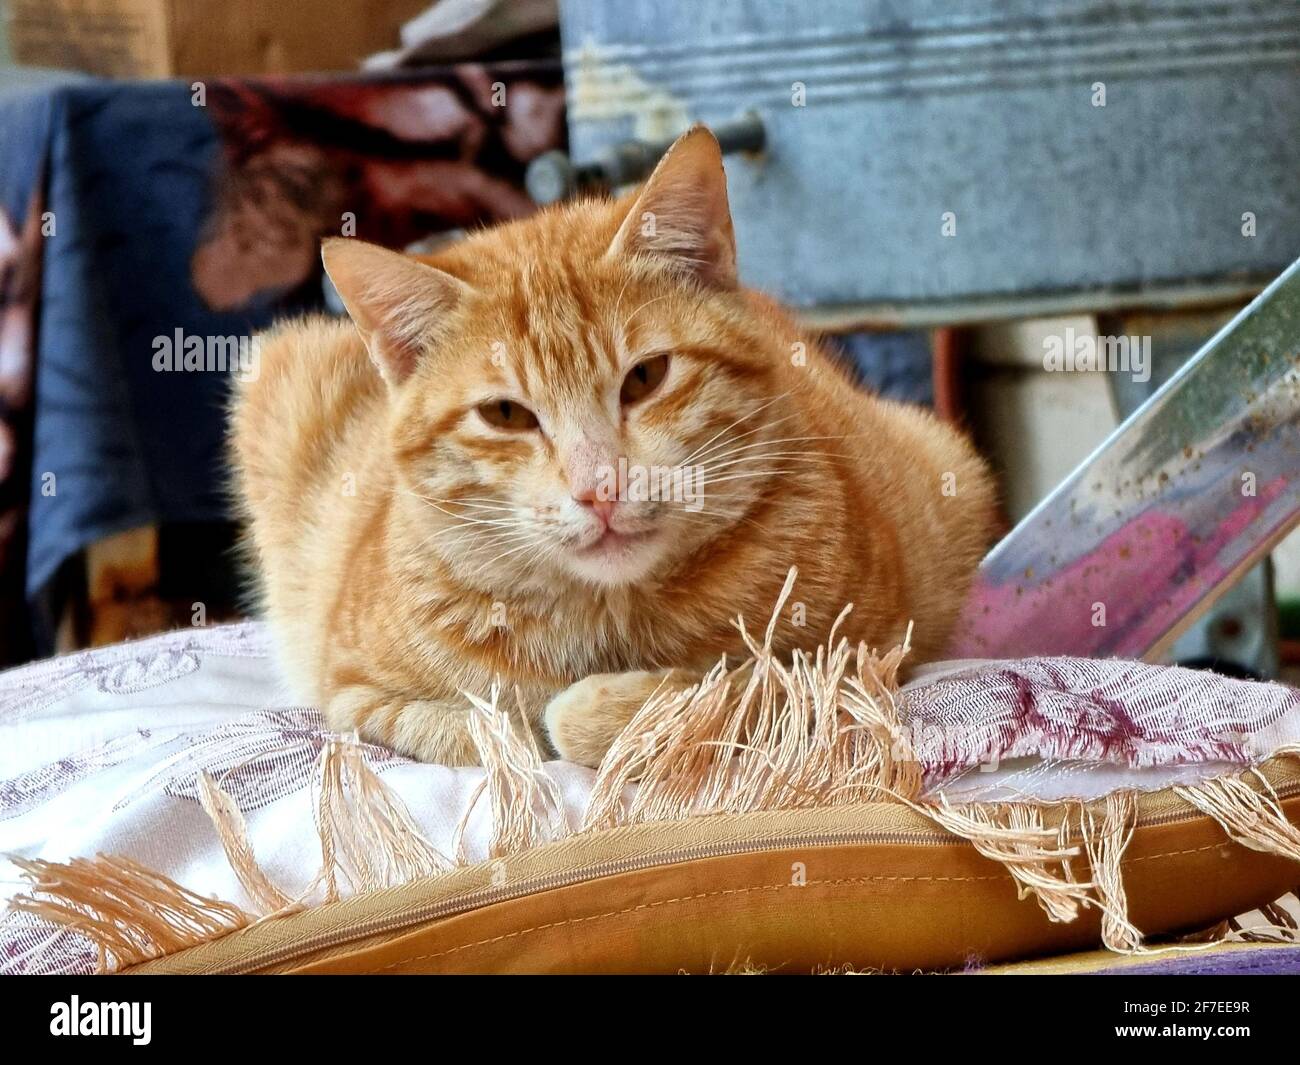 photo of beautiful cat from iraq Stock Photo